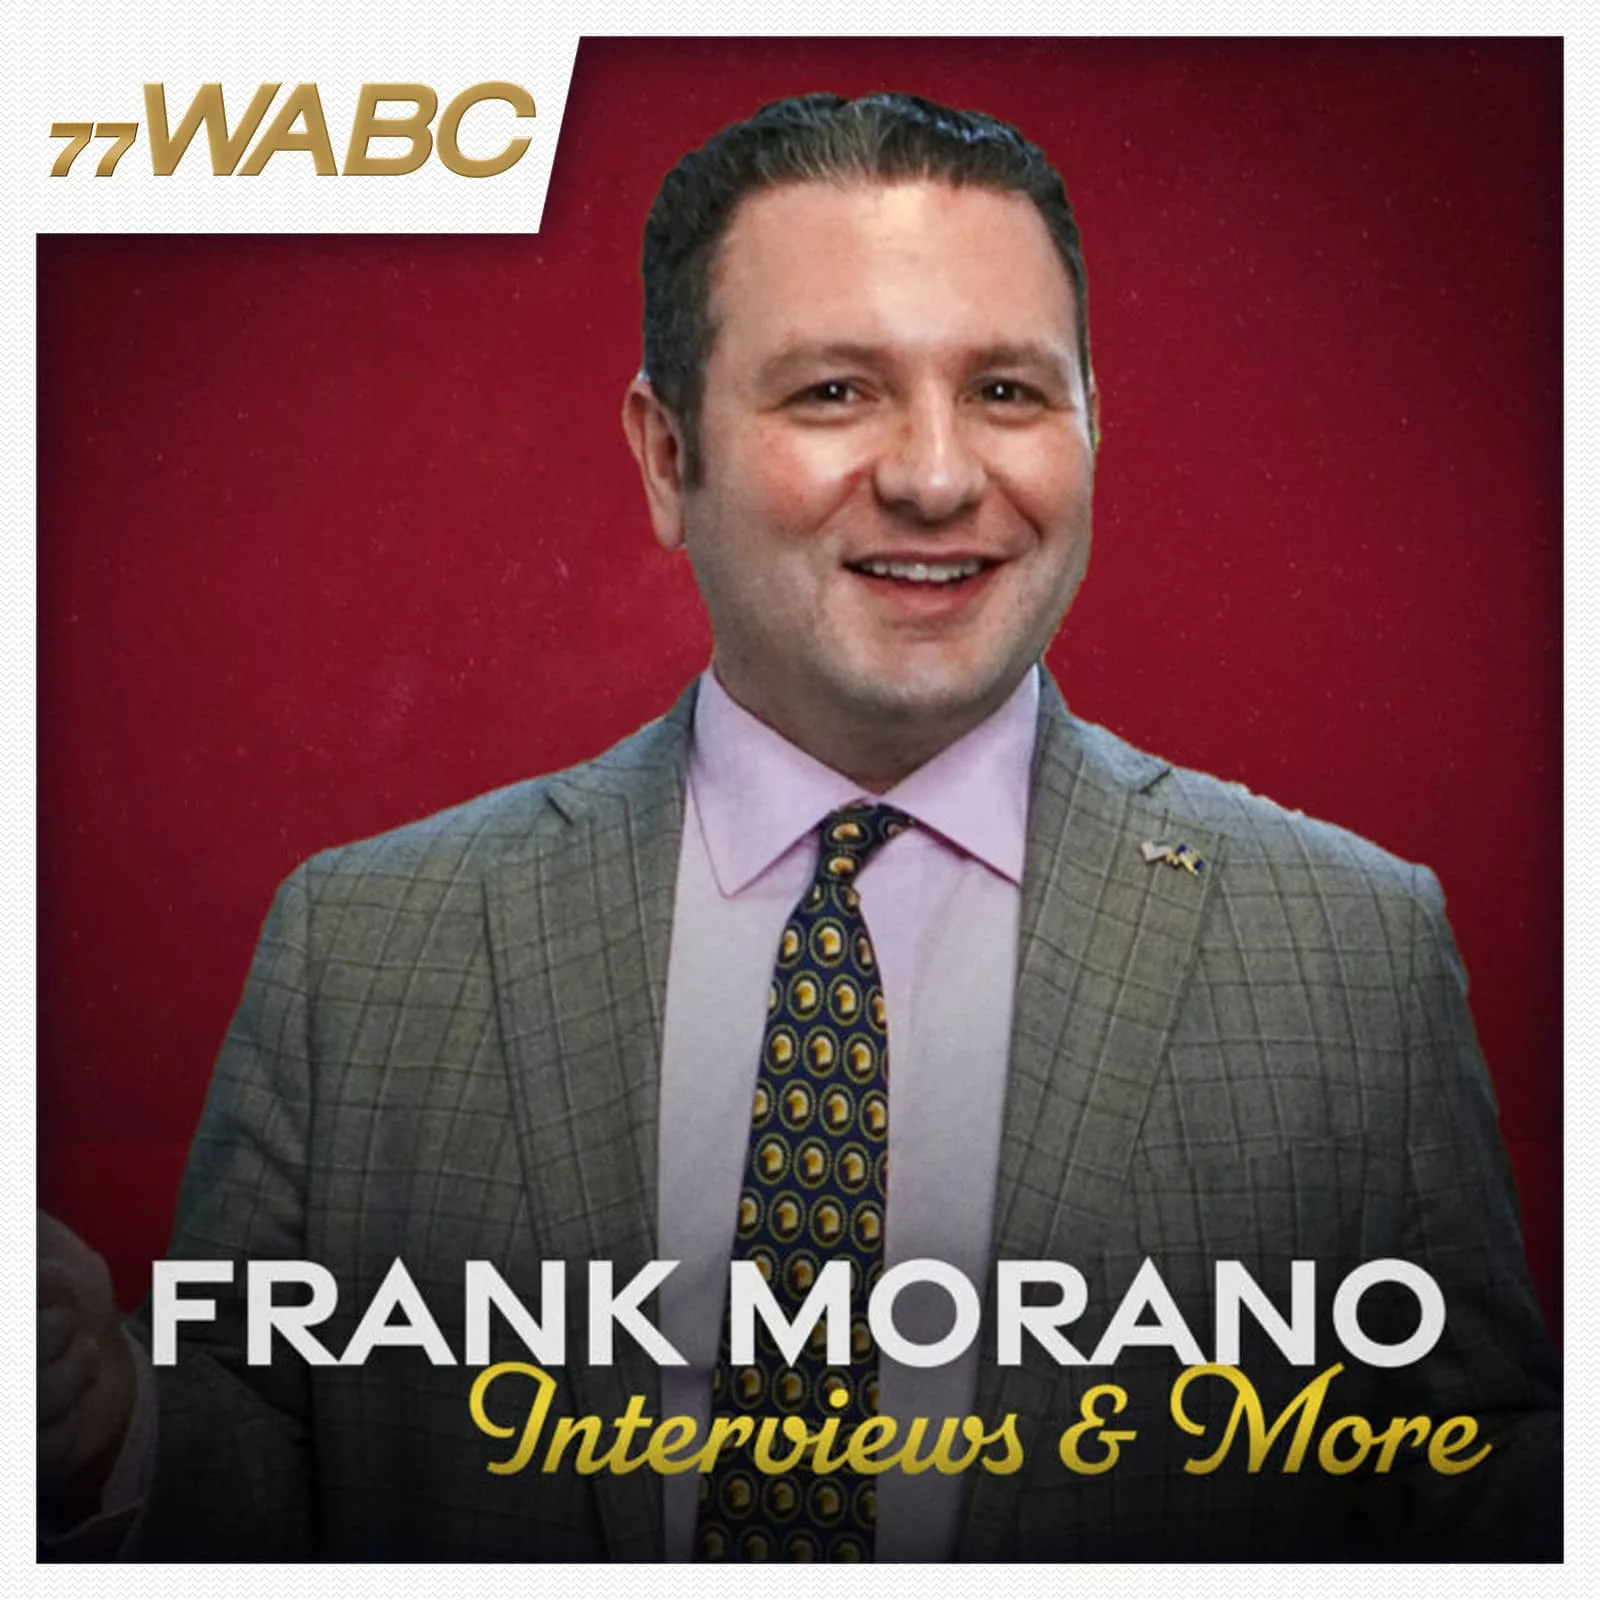 frank-morano-interviews-and-more-podcast-new-logo549835